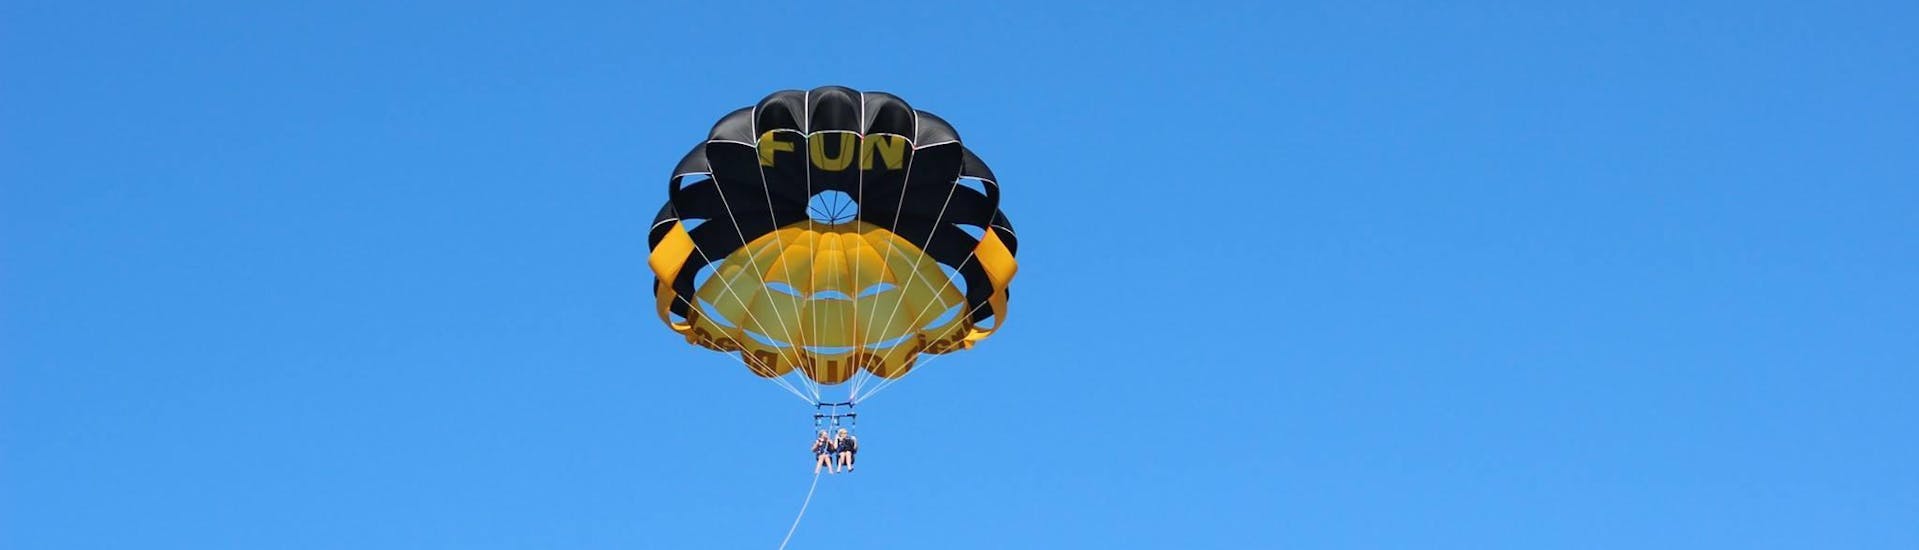 Photo of the parachute used for the Parasailing at Galé Beach near Albufeira with Nautifun Galé Albufeira